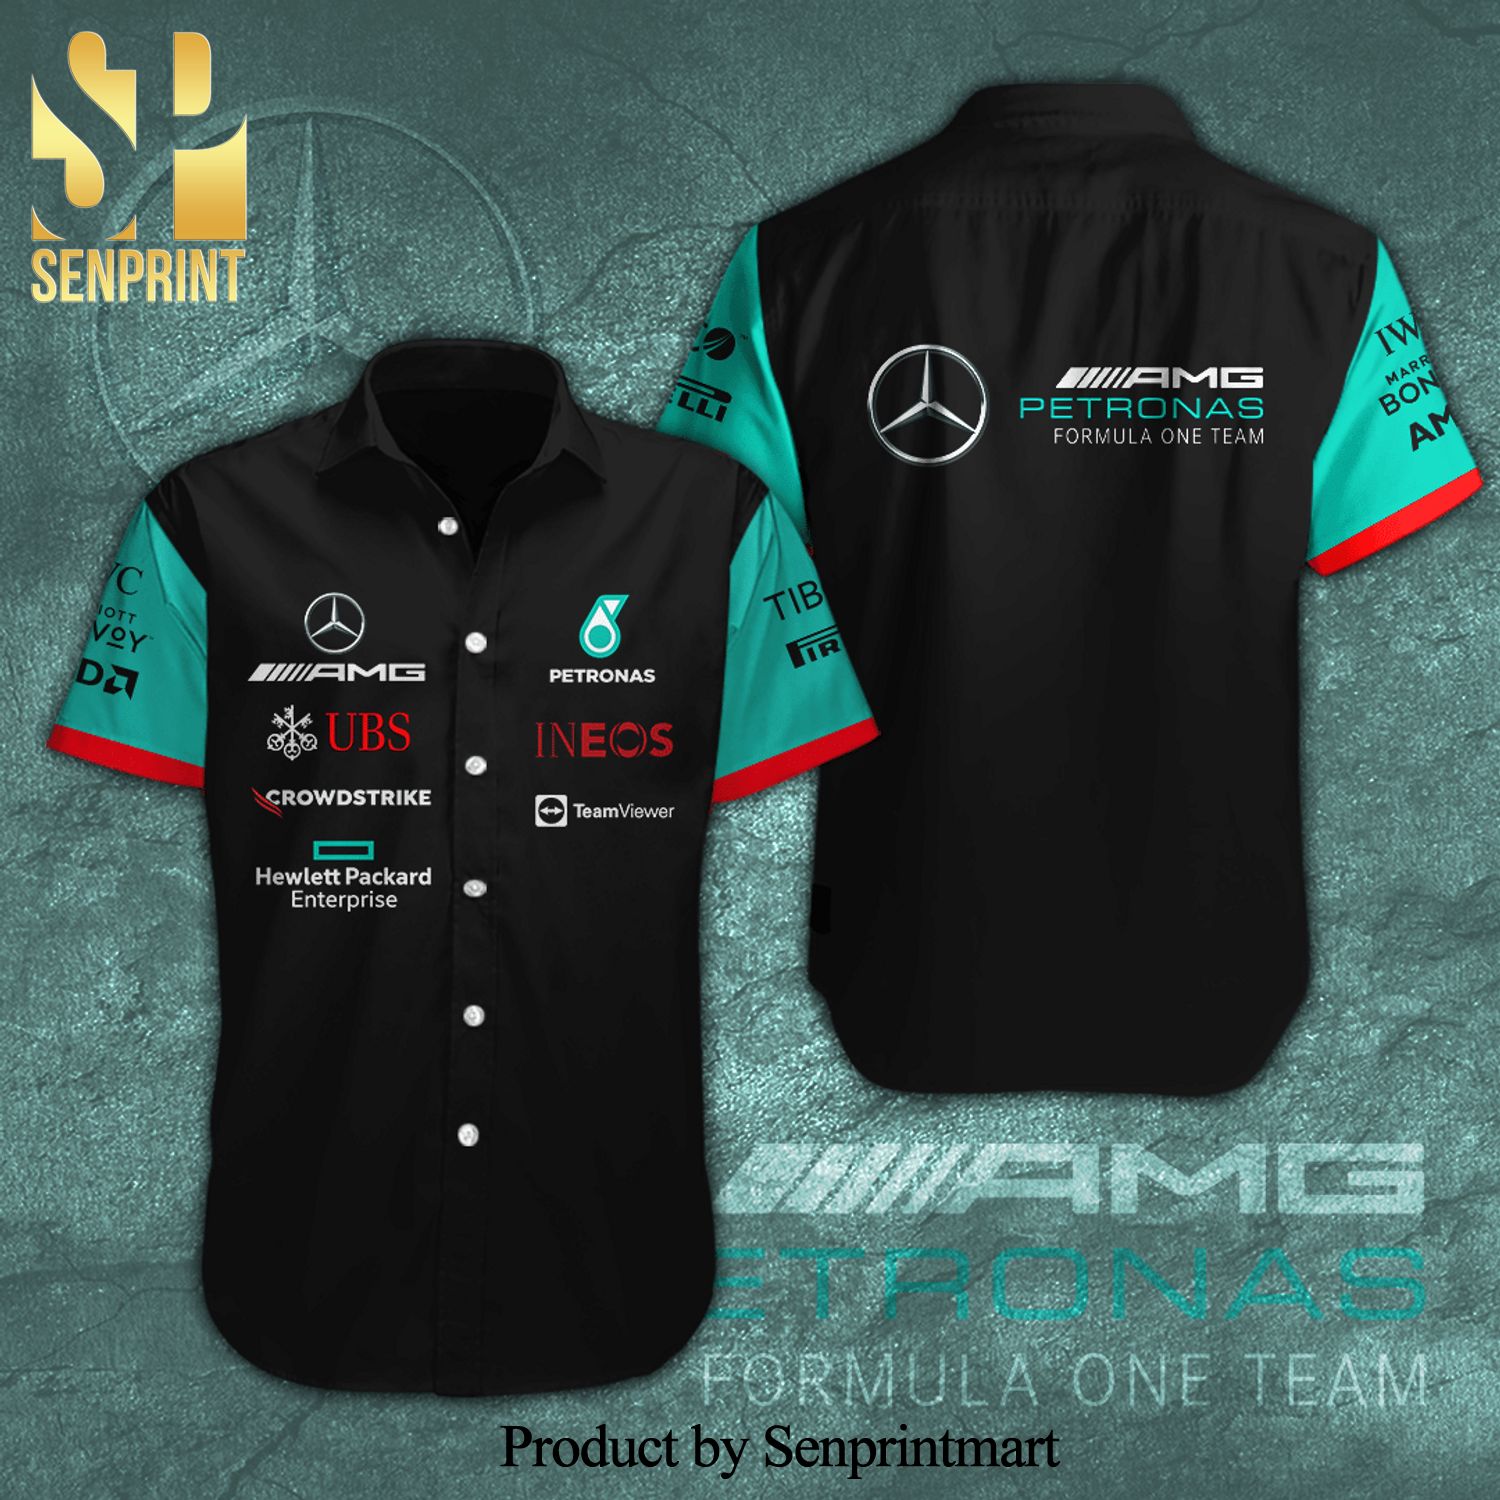 Mercedes AMG Petronas F1 Team Pirelli Ineos Ubs Full Printing Short Sleeve Dress Shirt Hawaiian Summer Aloha Beach Shirt - Black White Navy